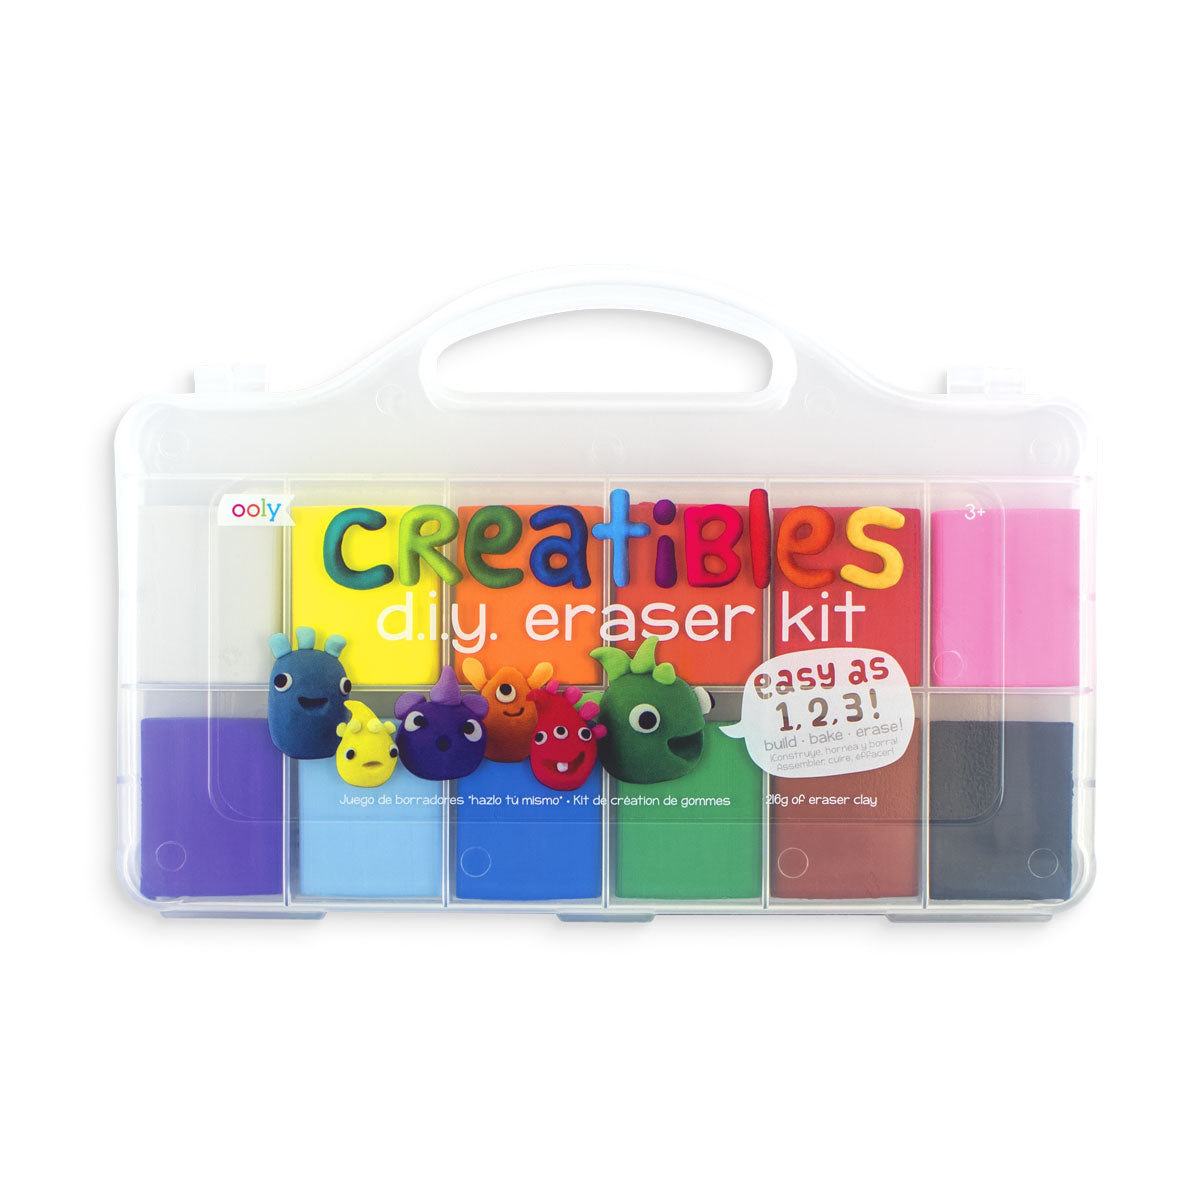 Creatibles DIY Eraser Kit